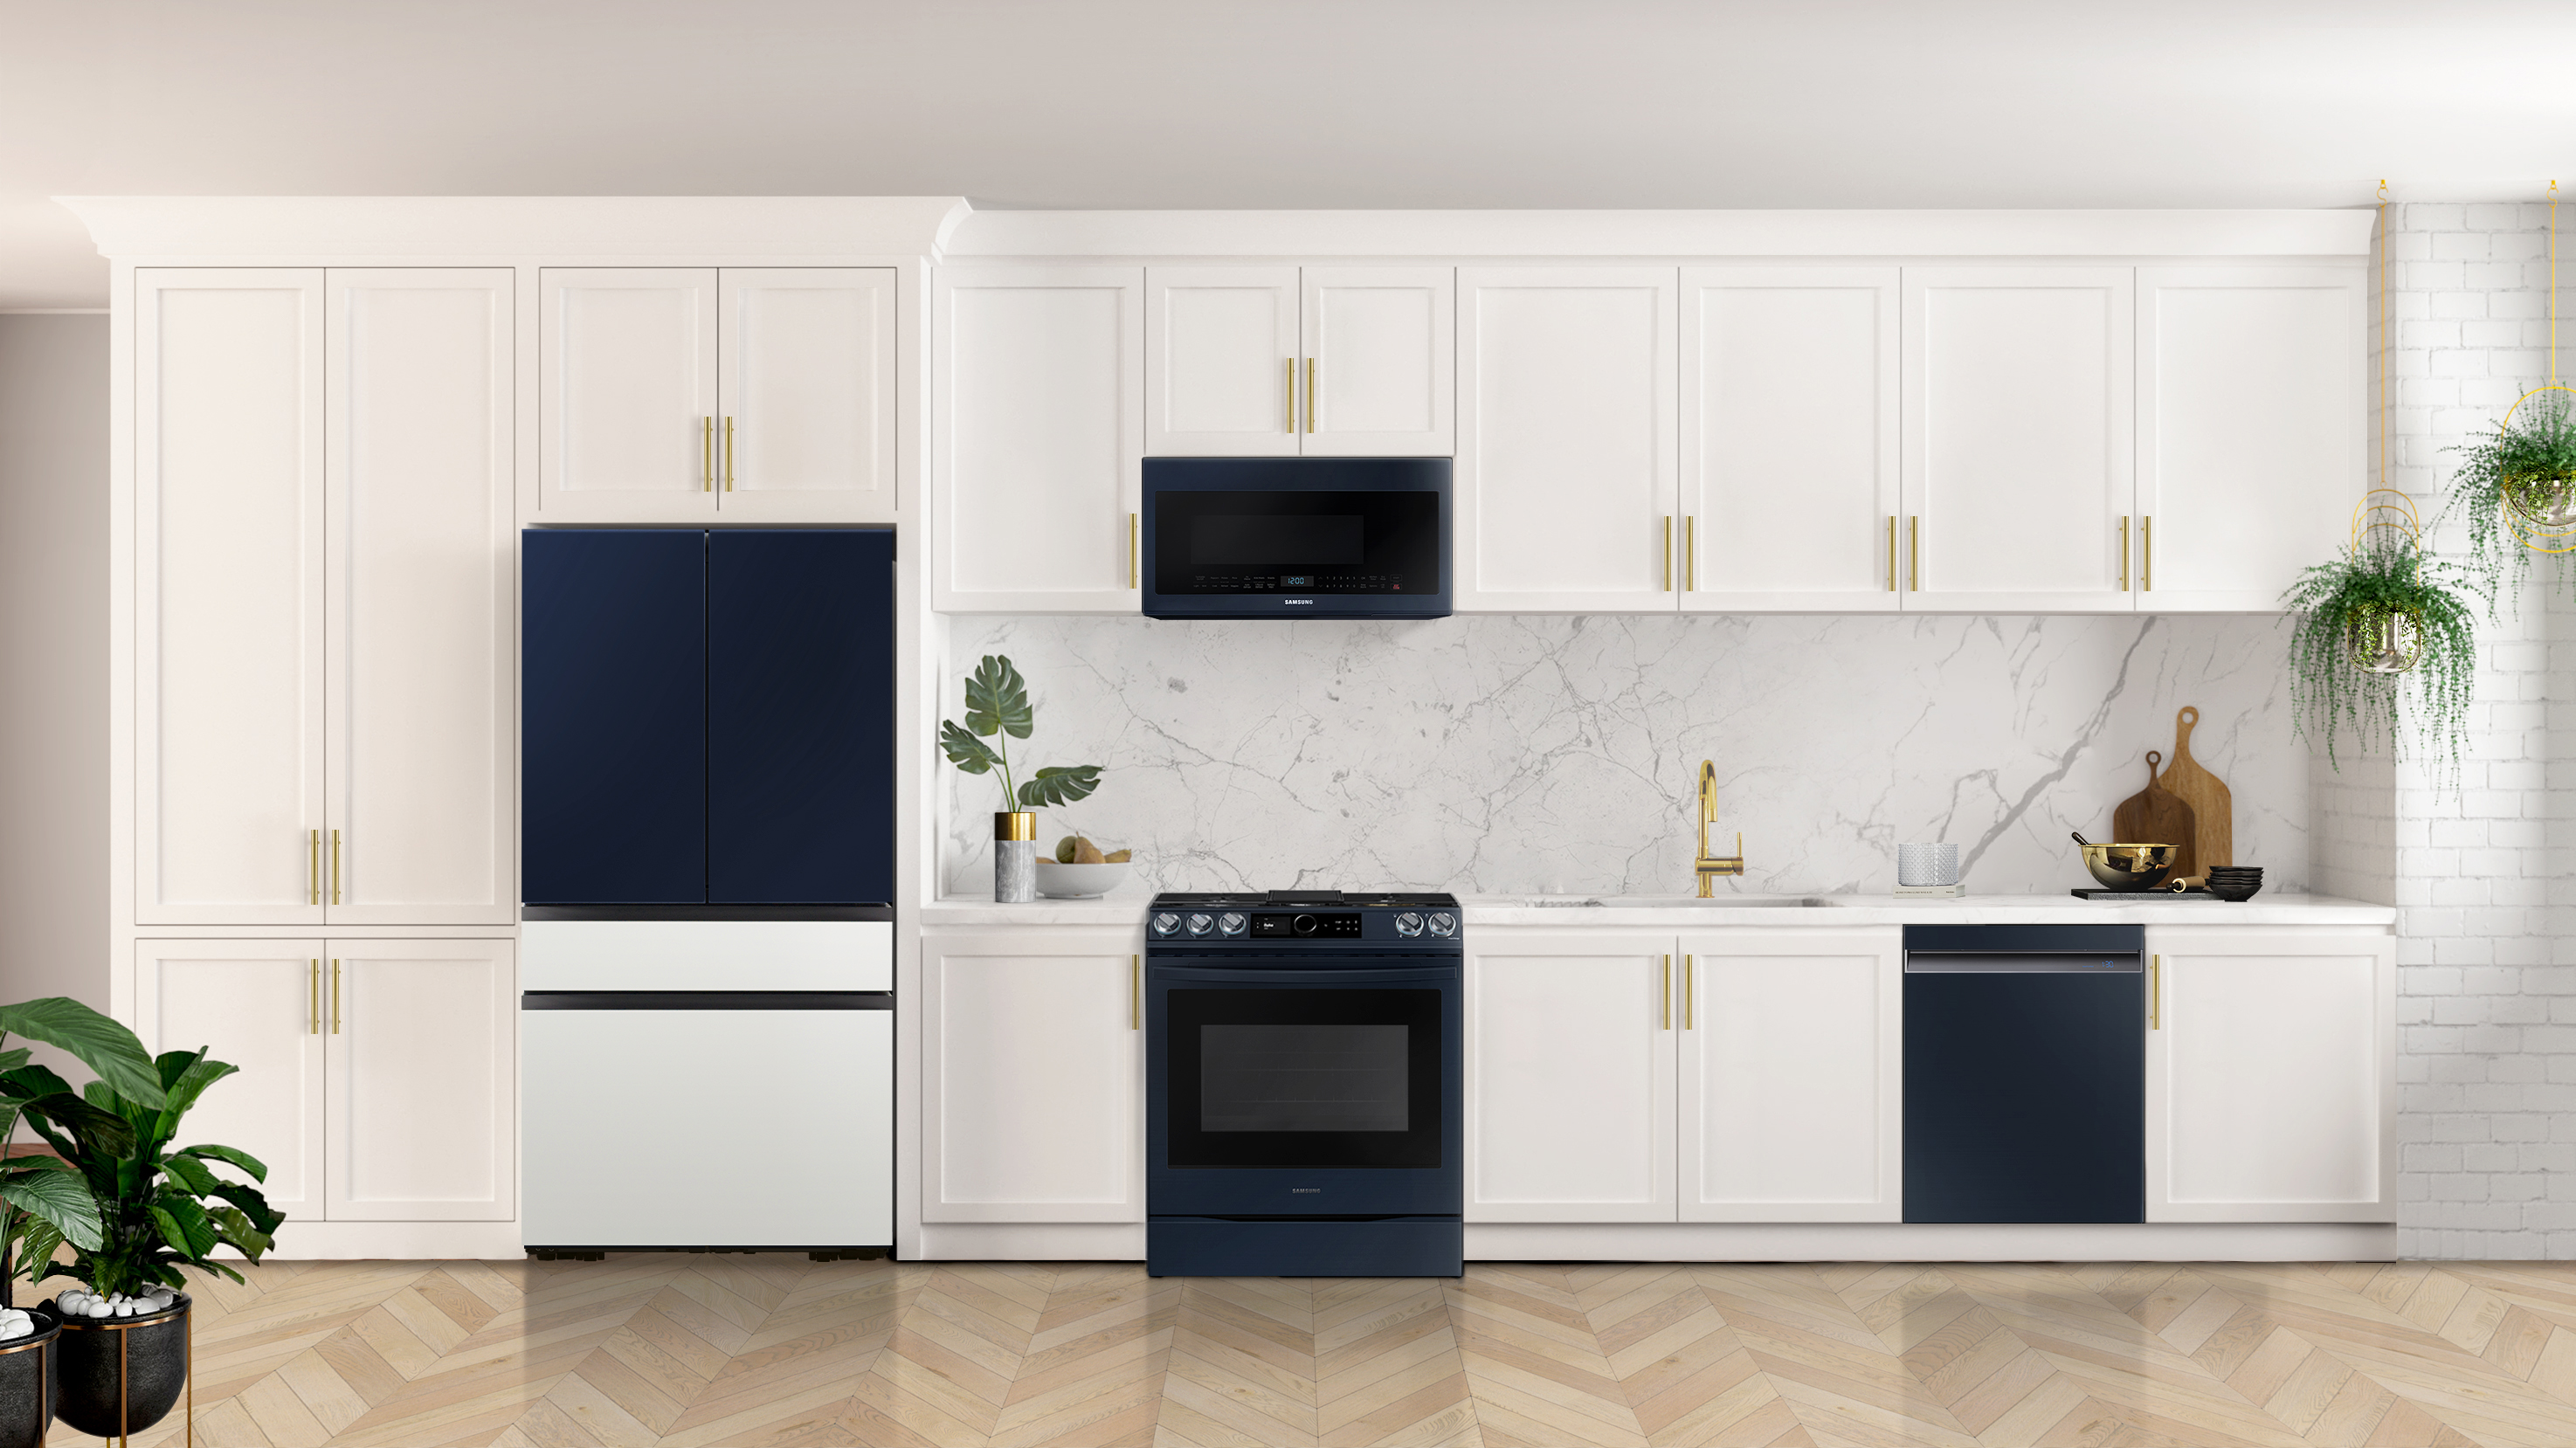 The Samsung Bespoke line of kitchen appliances